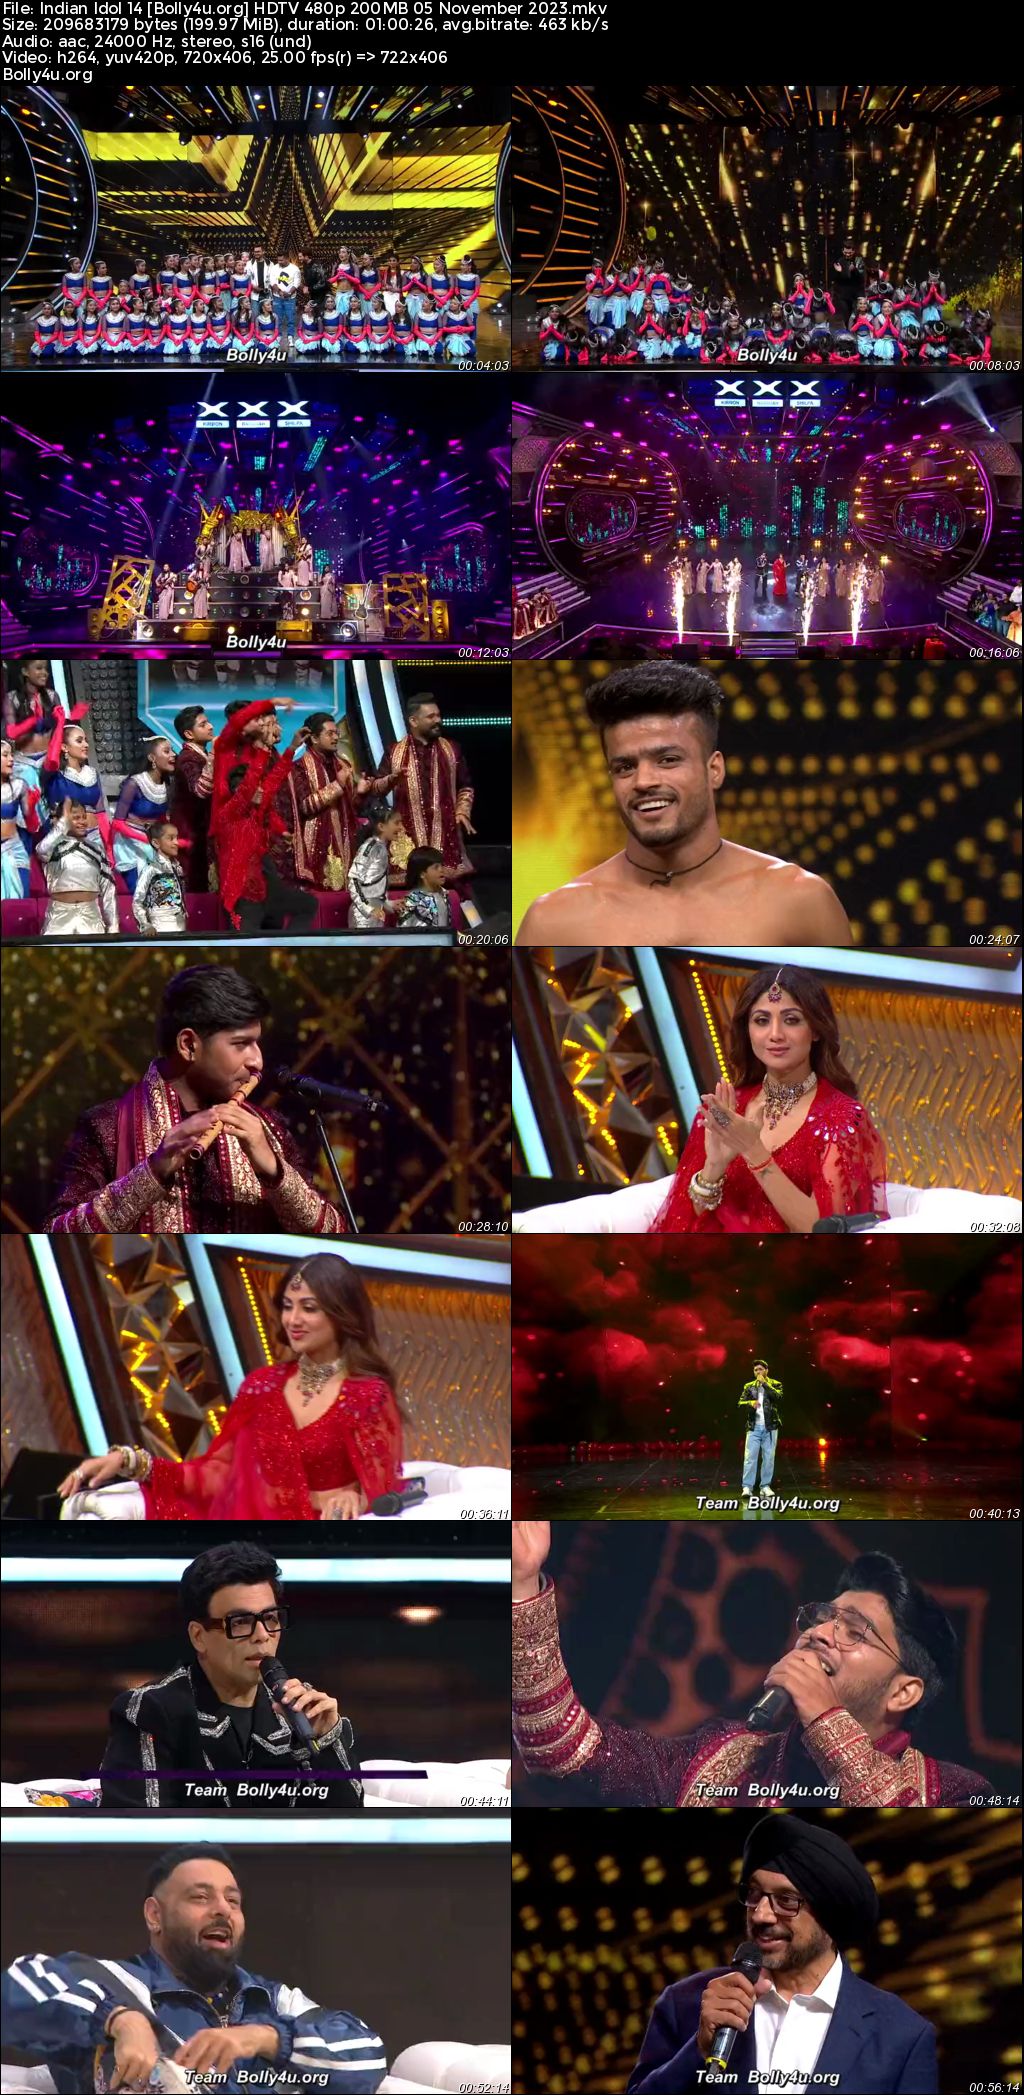  Indias Got Talent Season S10 HDTV 480p 200MB 05 November 2023 Download